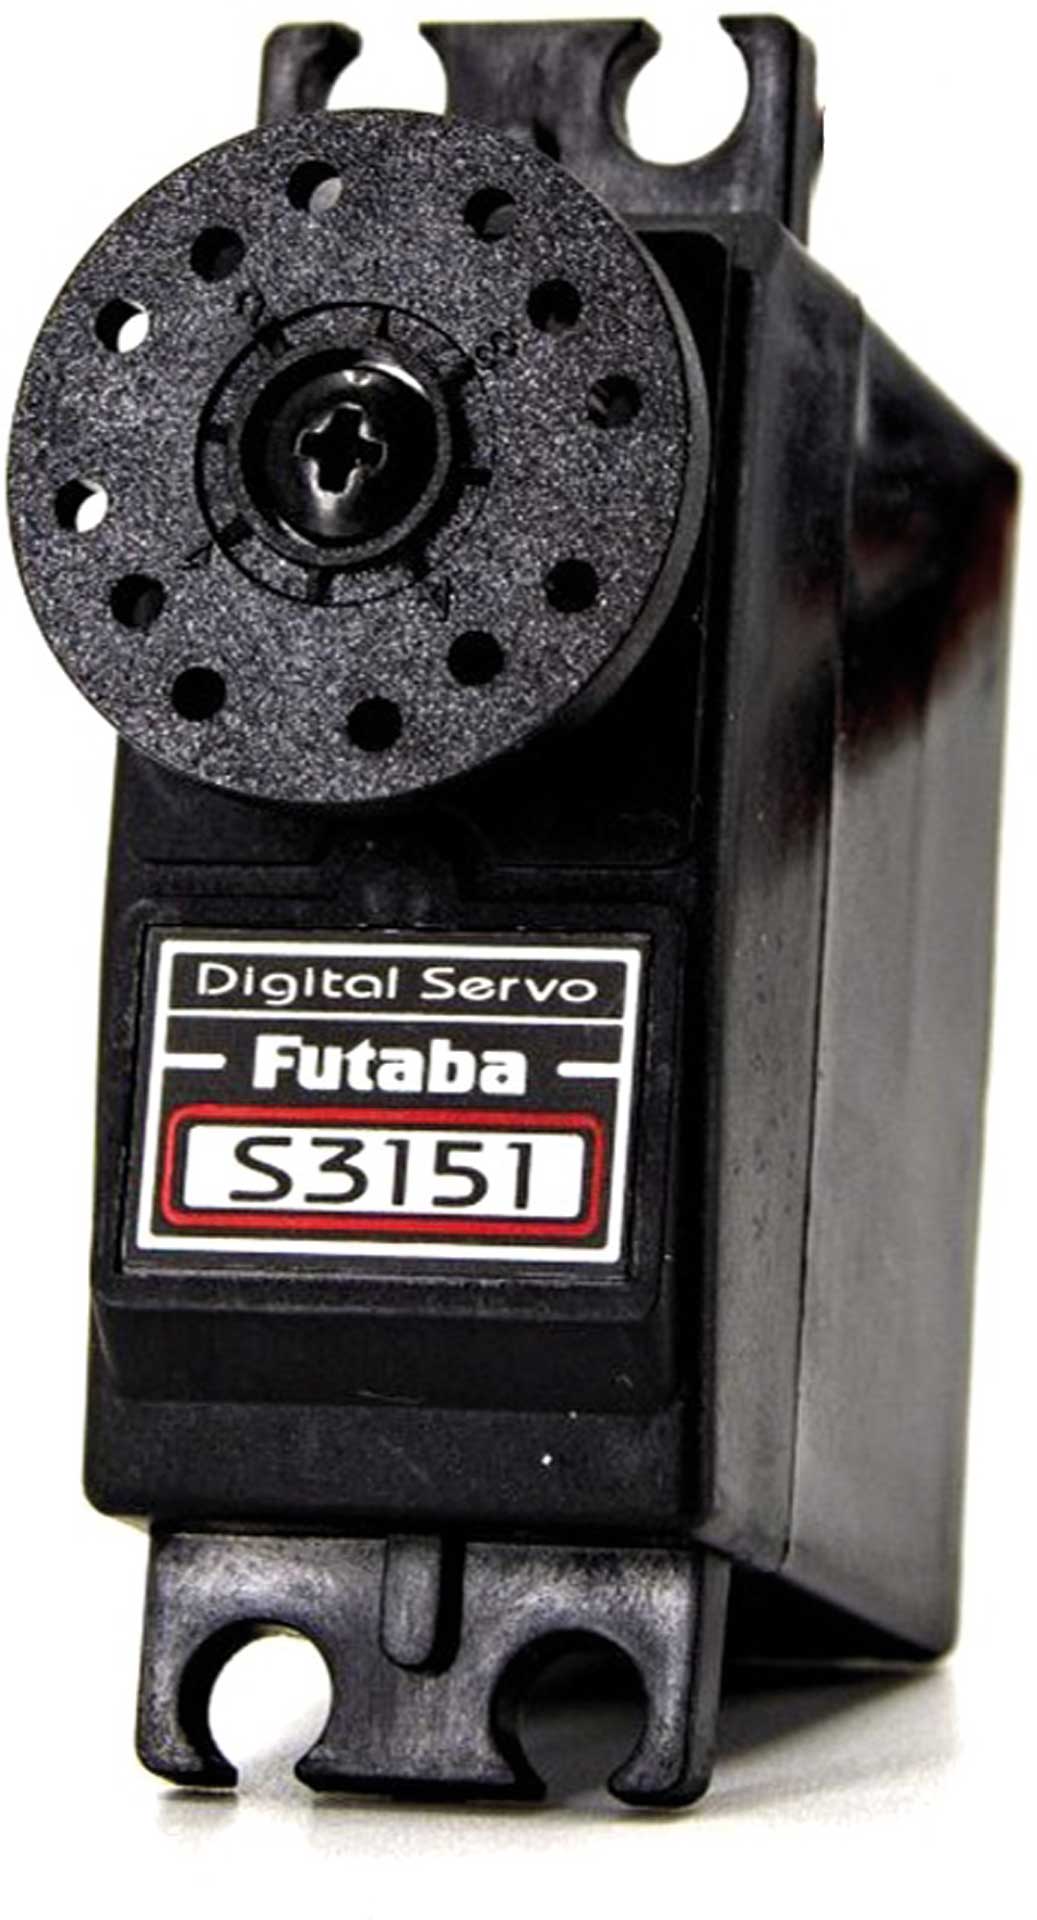 FUTABA S 3151 DIGITAL STANDARD SERVO